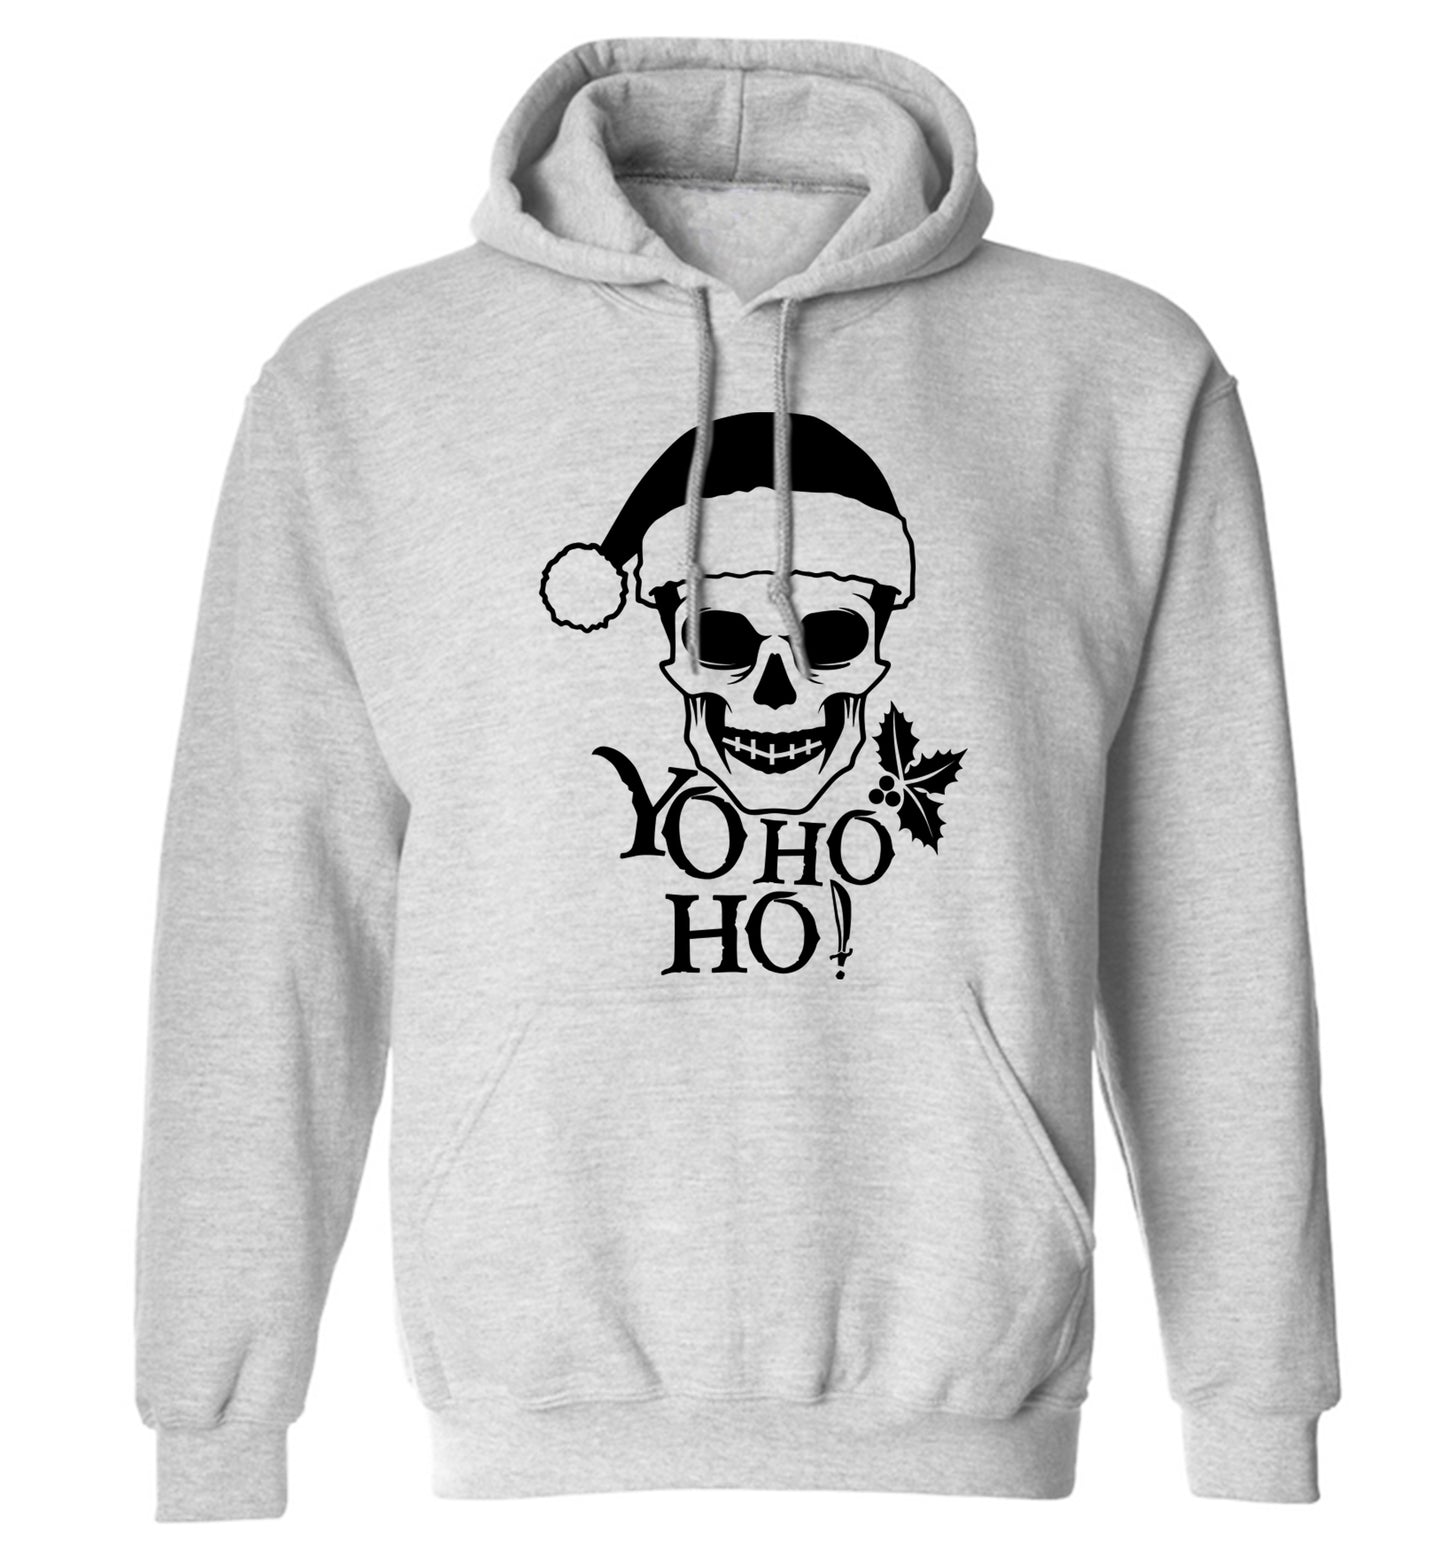 Yo ho ho! adults unisex grey hoodie 2XL